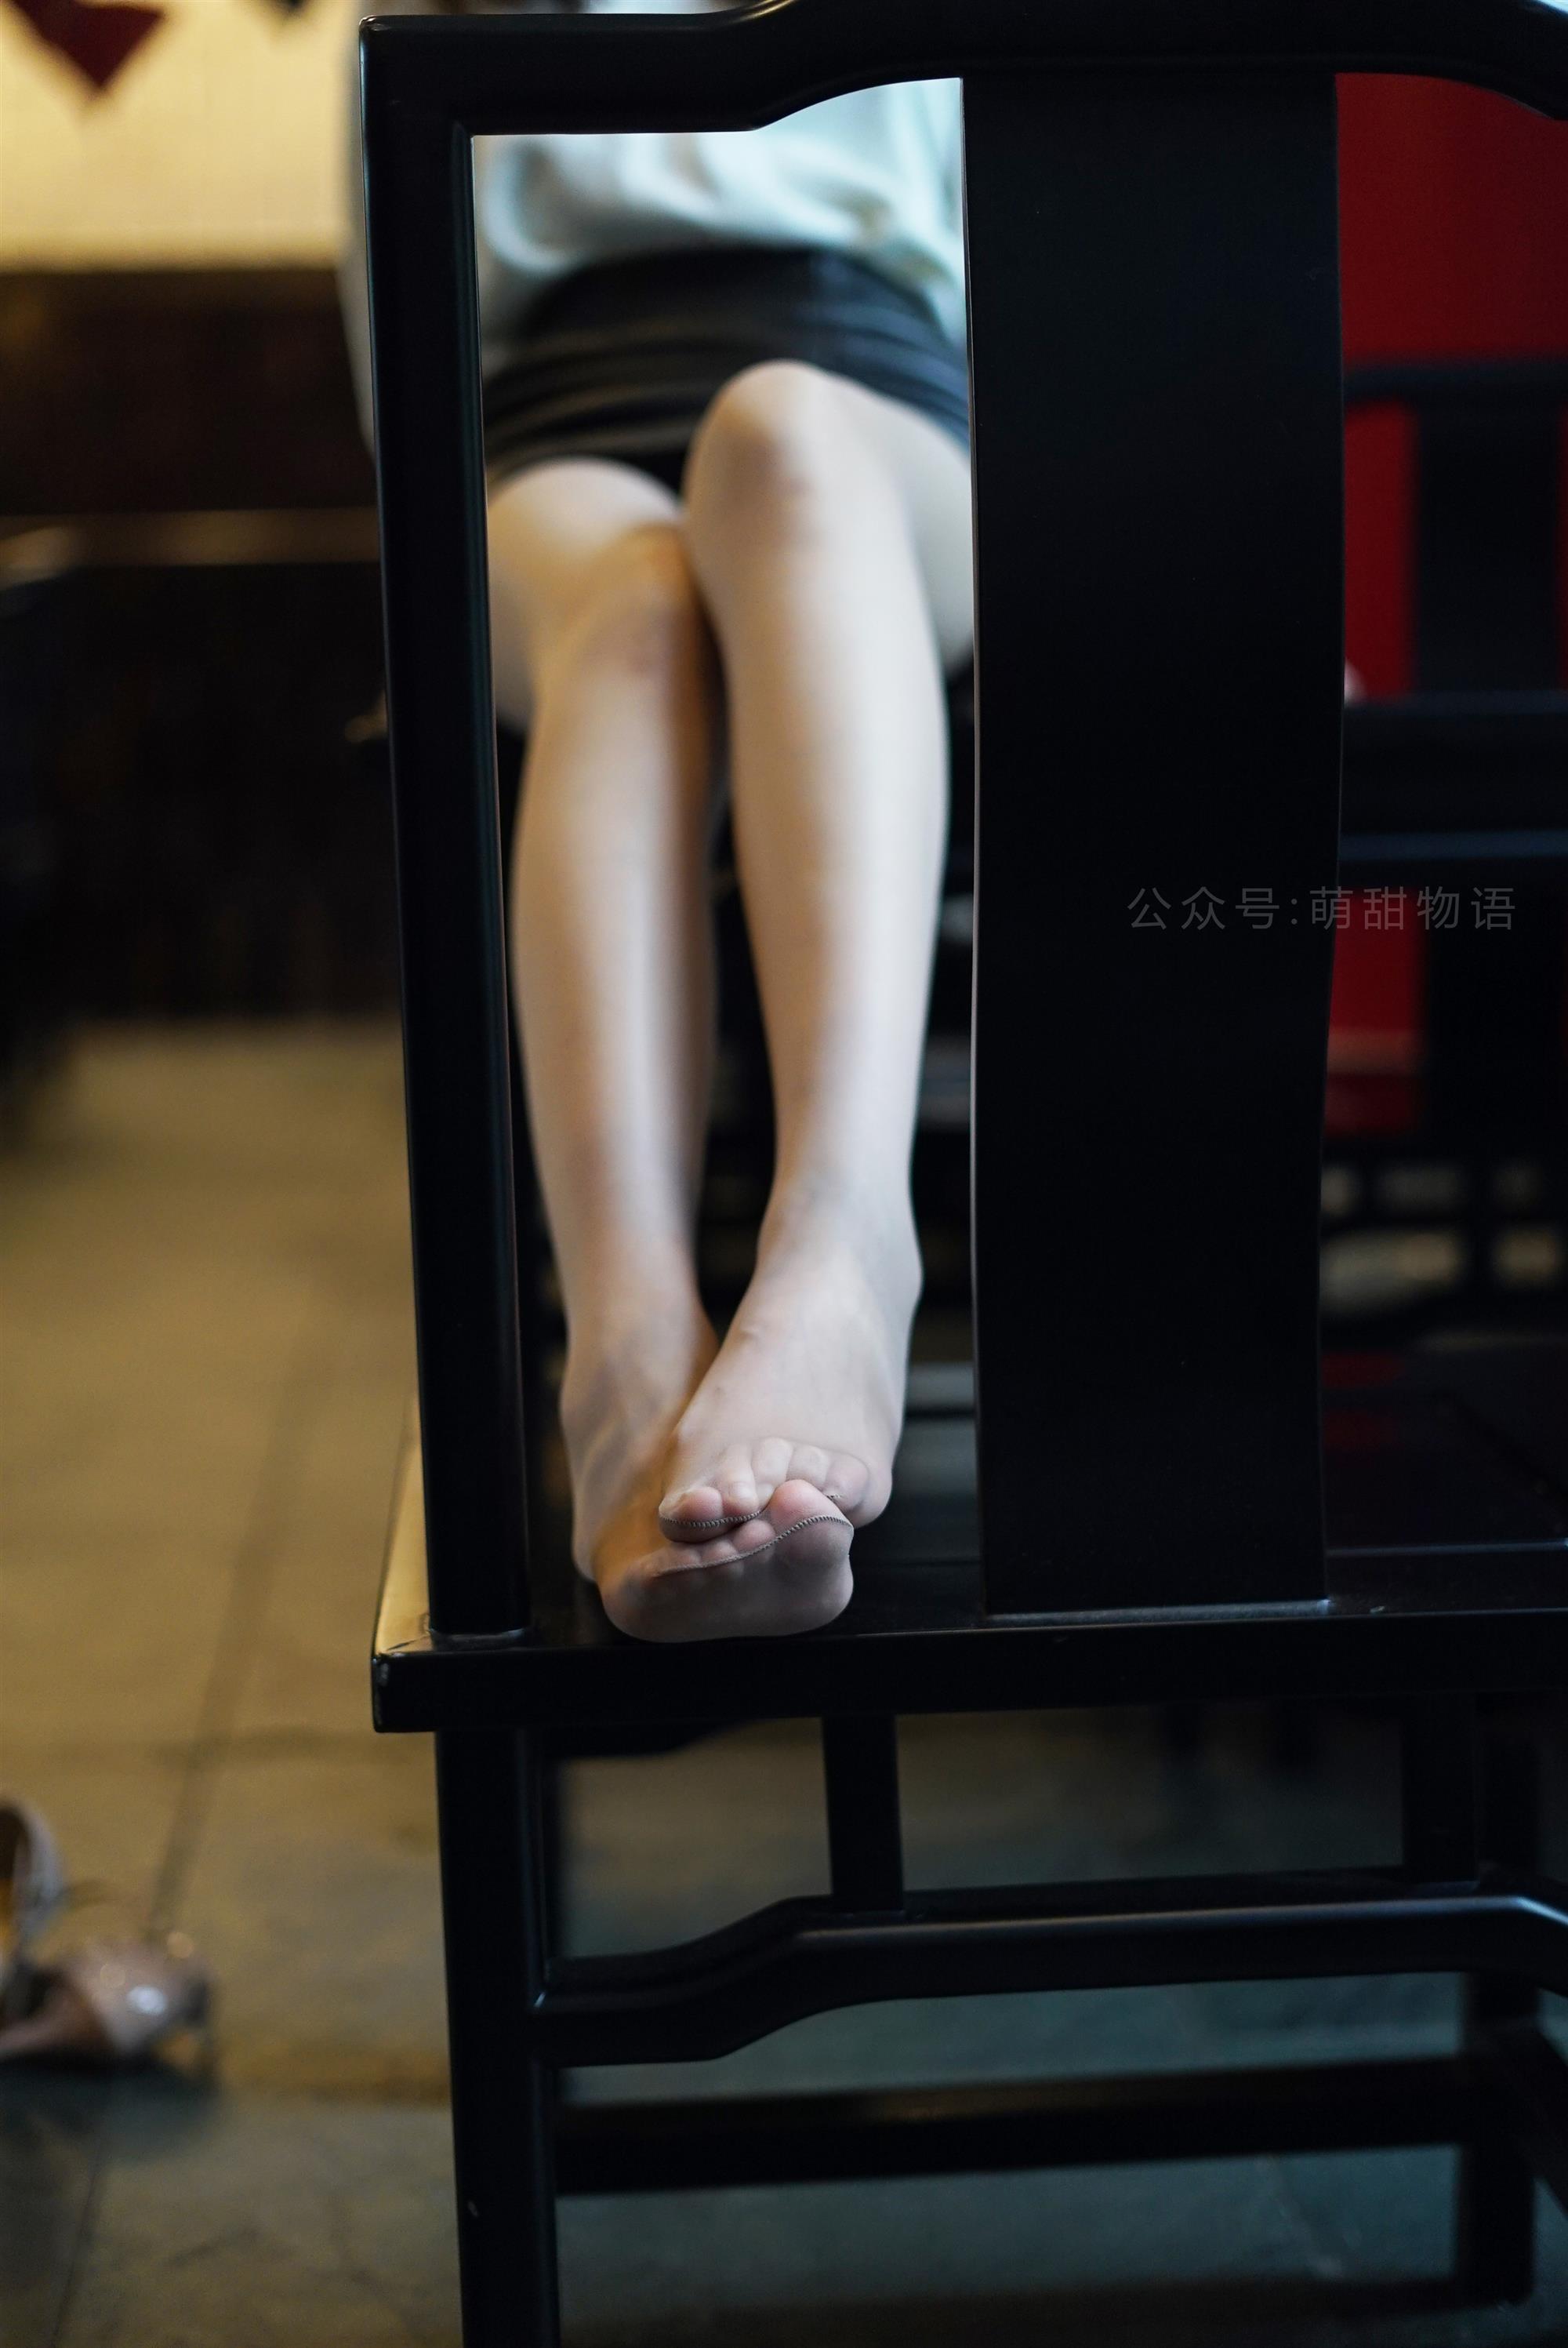 MTWY 萌甜物语 XM208 皮裙 腿腿 - 29.jpg